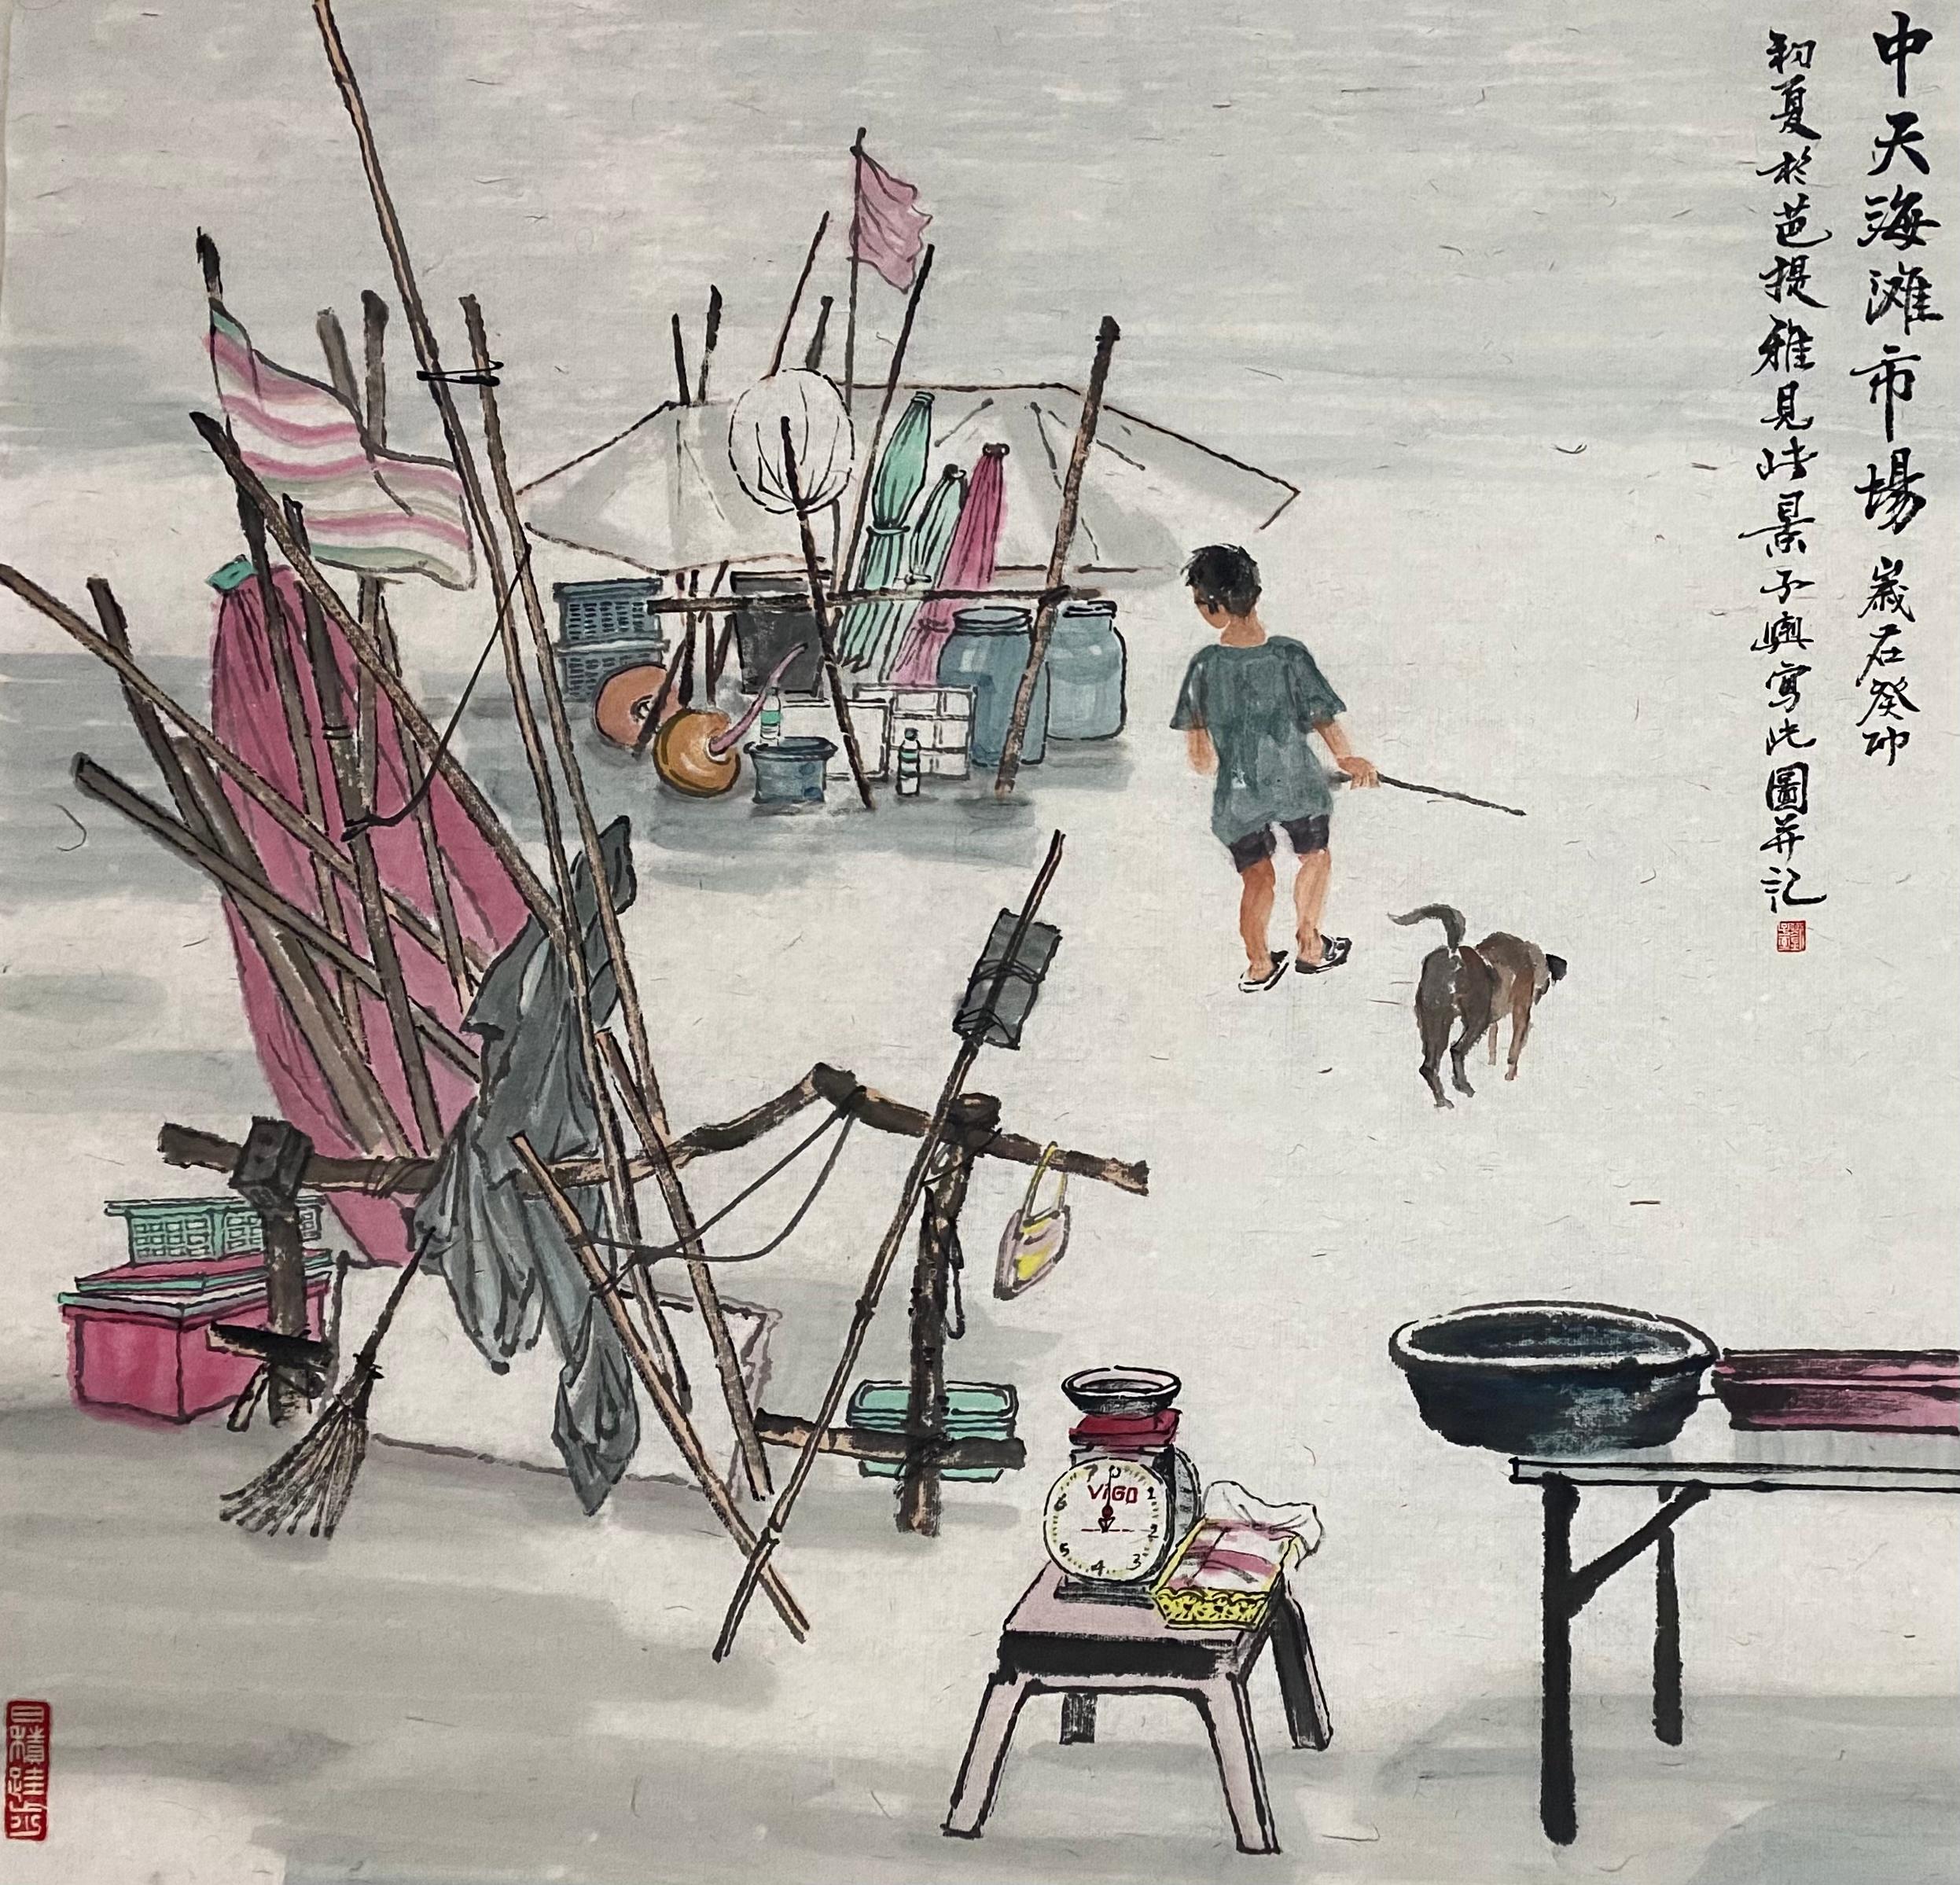 Art contemporain chinois de Liu Ziyu - Marché au bord de la mer